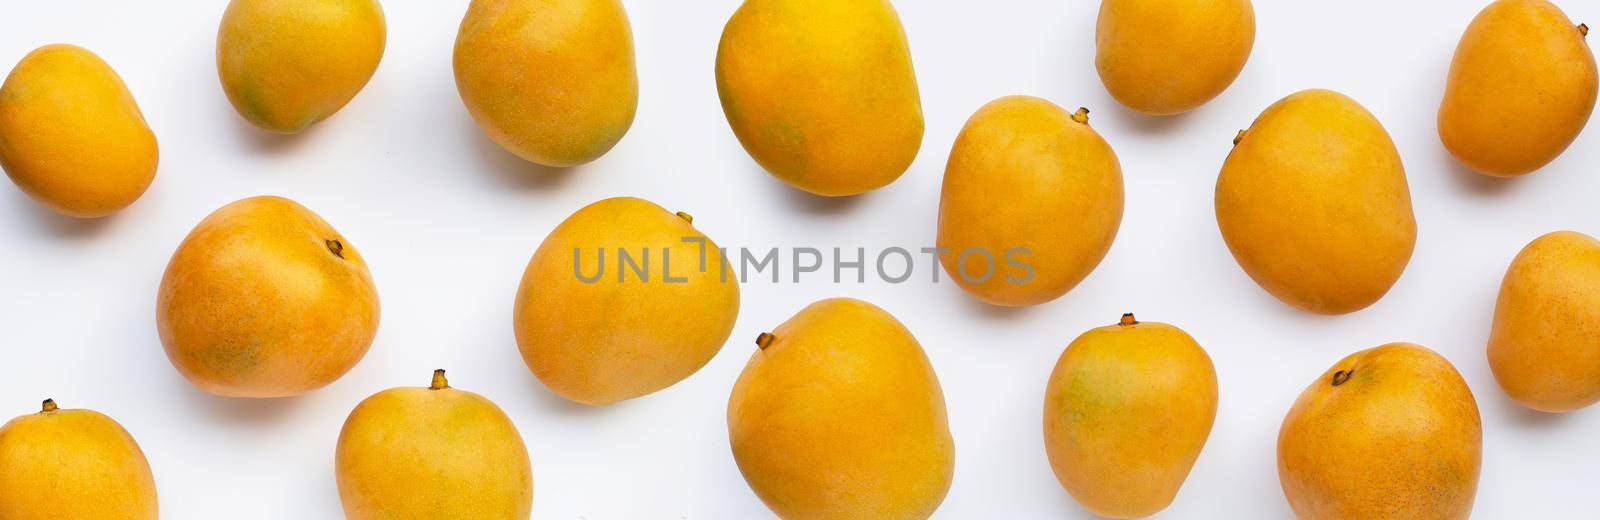 Tropical fruit, Mango on white background.  by Bowonpat